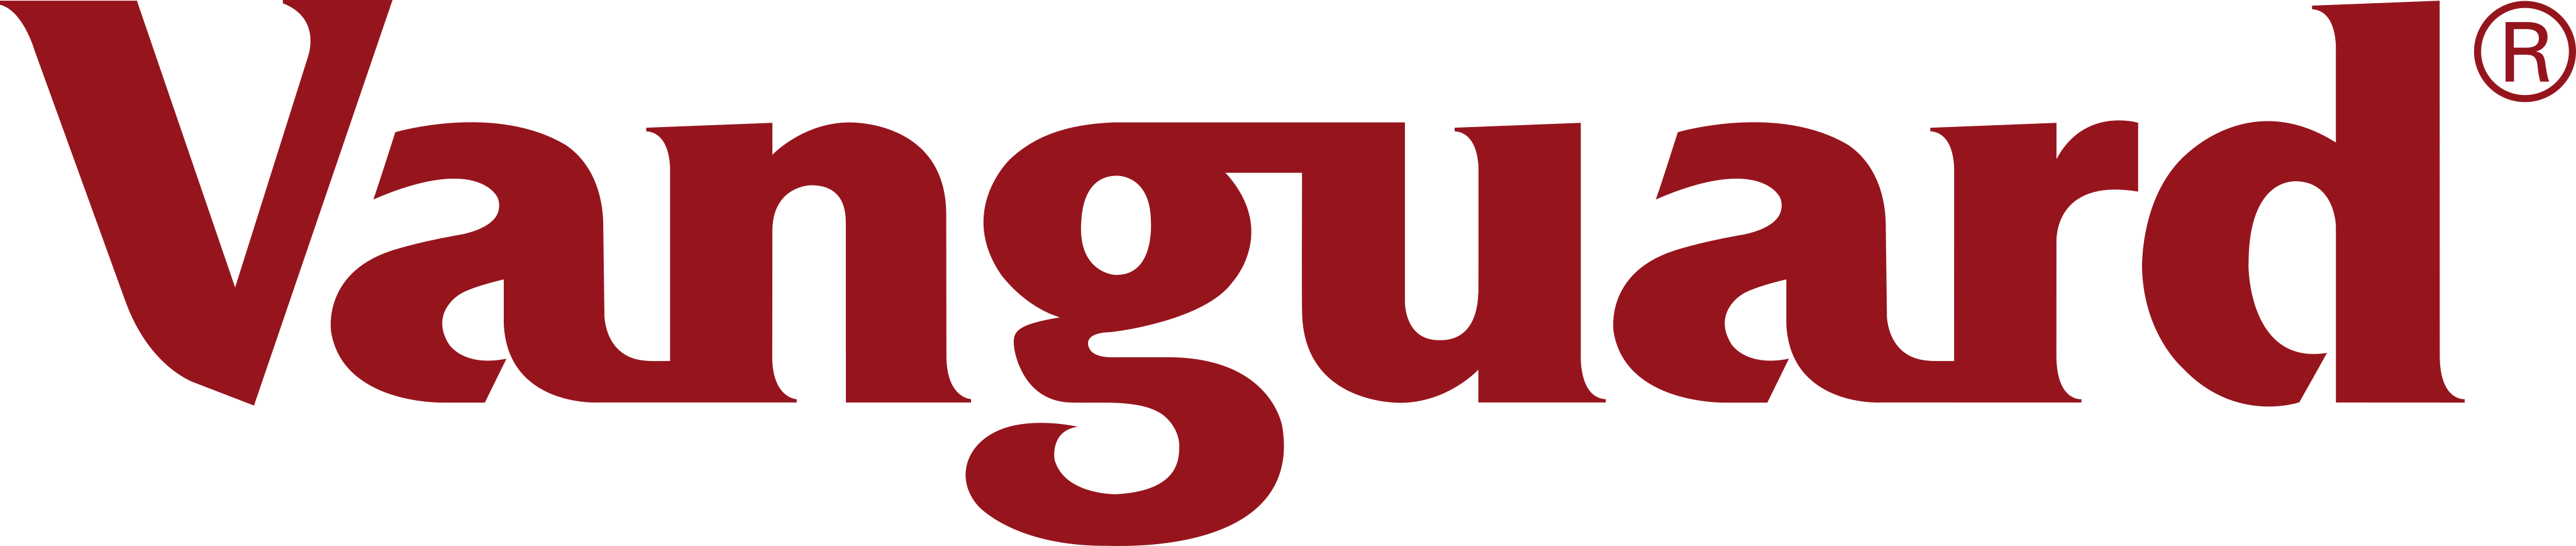 vanguard investiments logo - Vanguard Group Logo